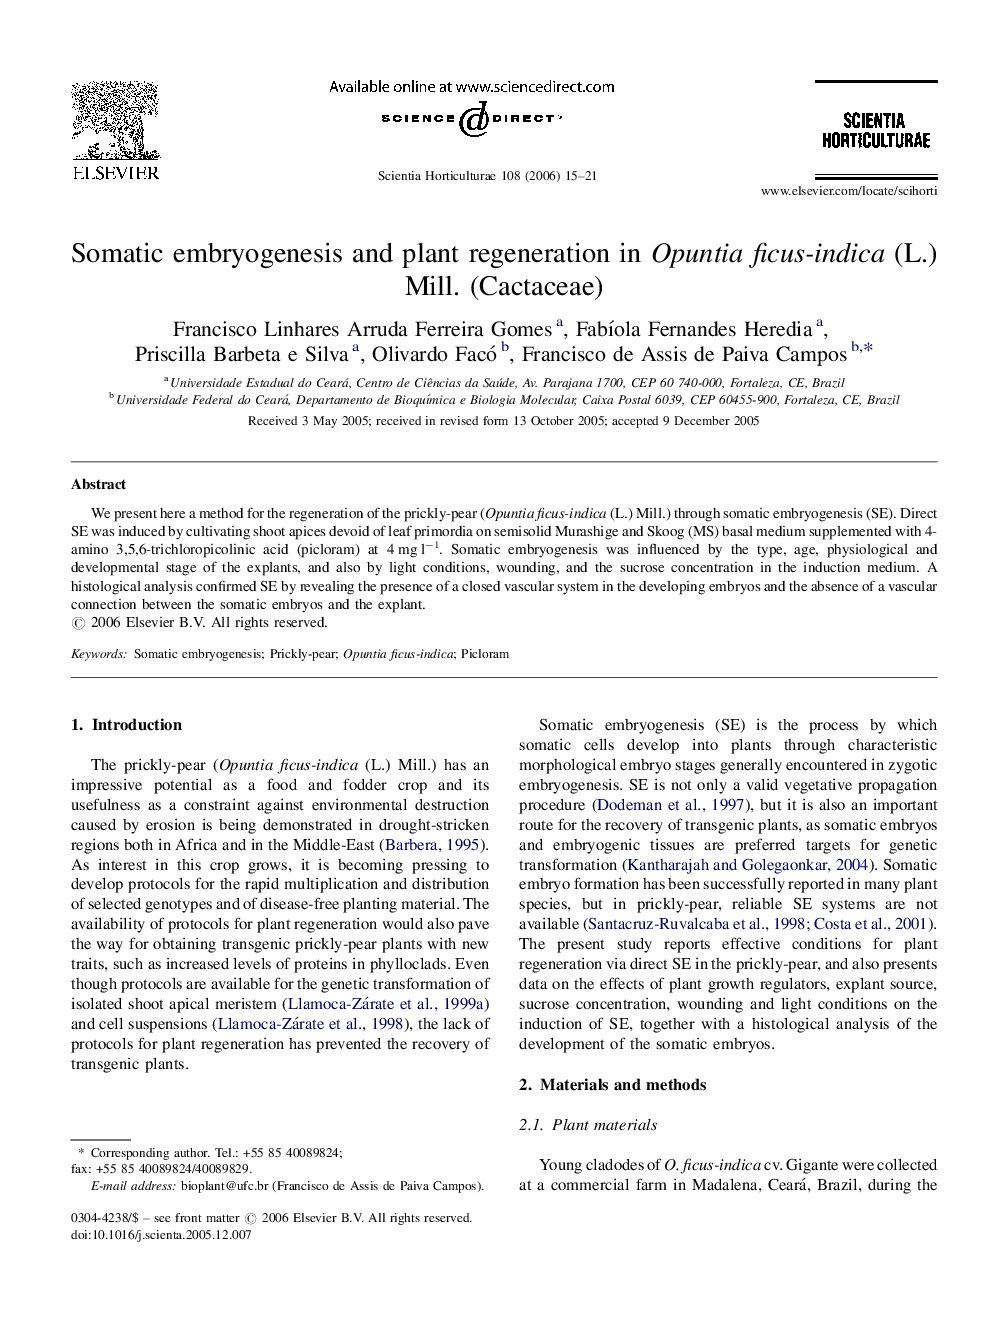 Somatic embryogenesis and plant regeneration in Opuntia ficus-indica (L.) Mill. (Cactaceae)